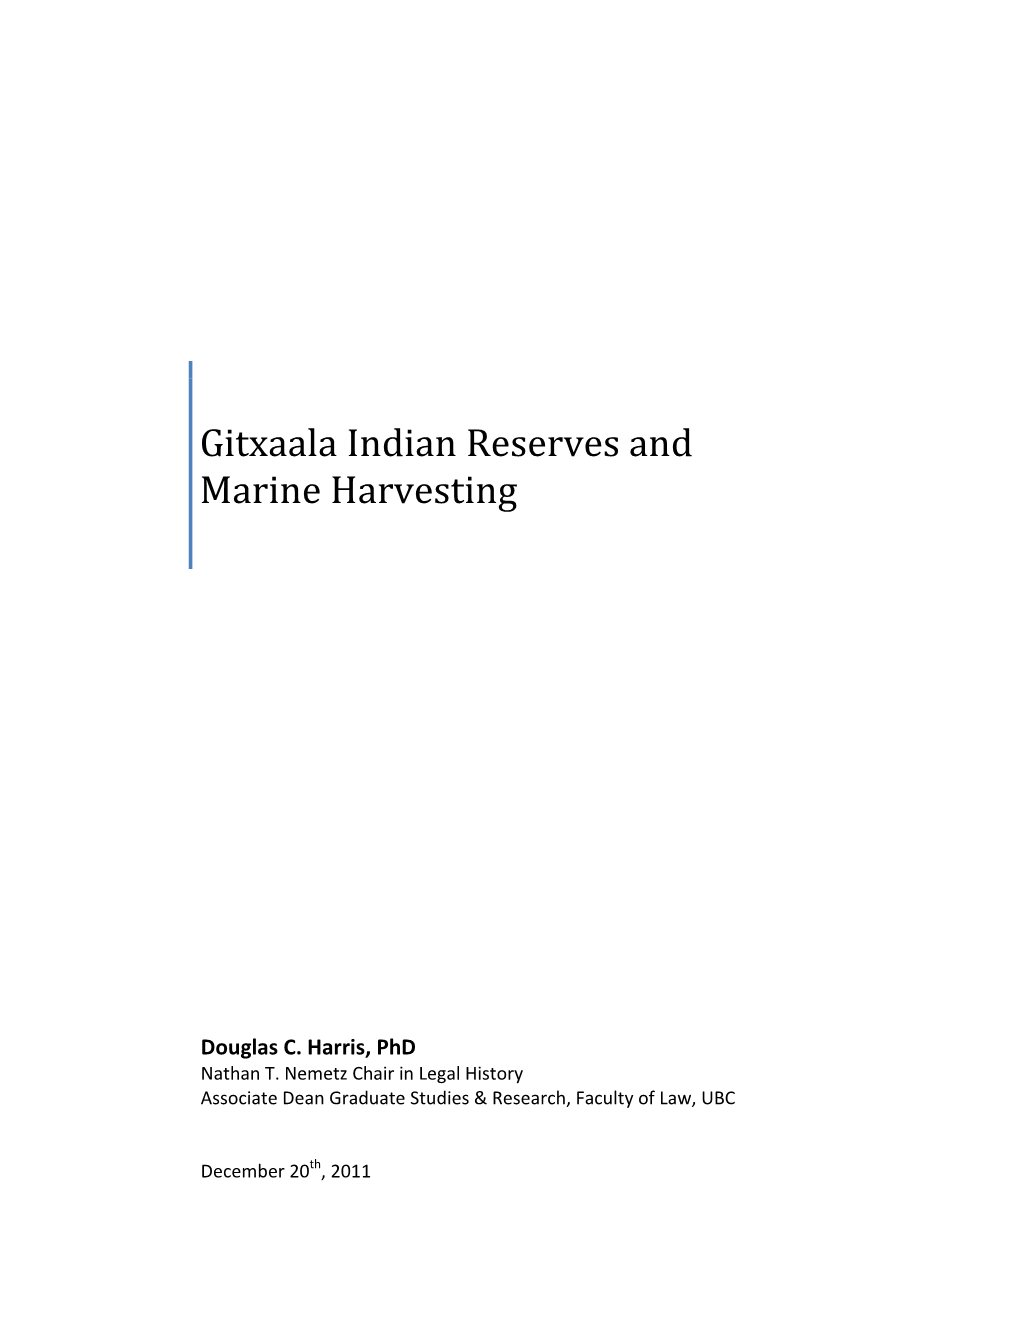 Gitxaala Indian Reserves and Marine Harvesting